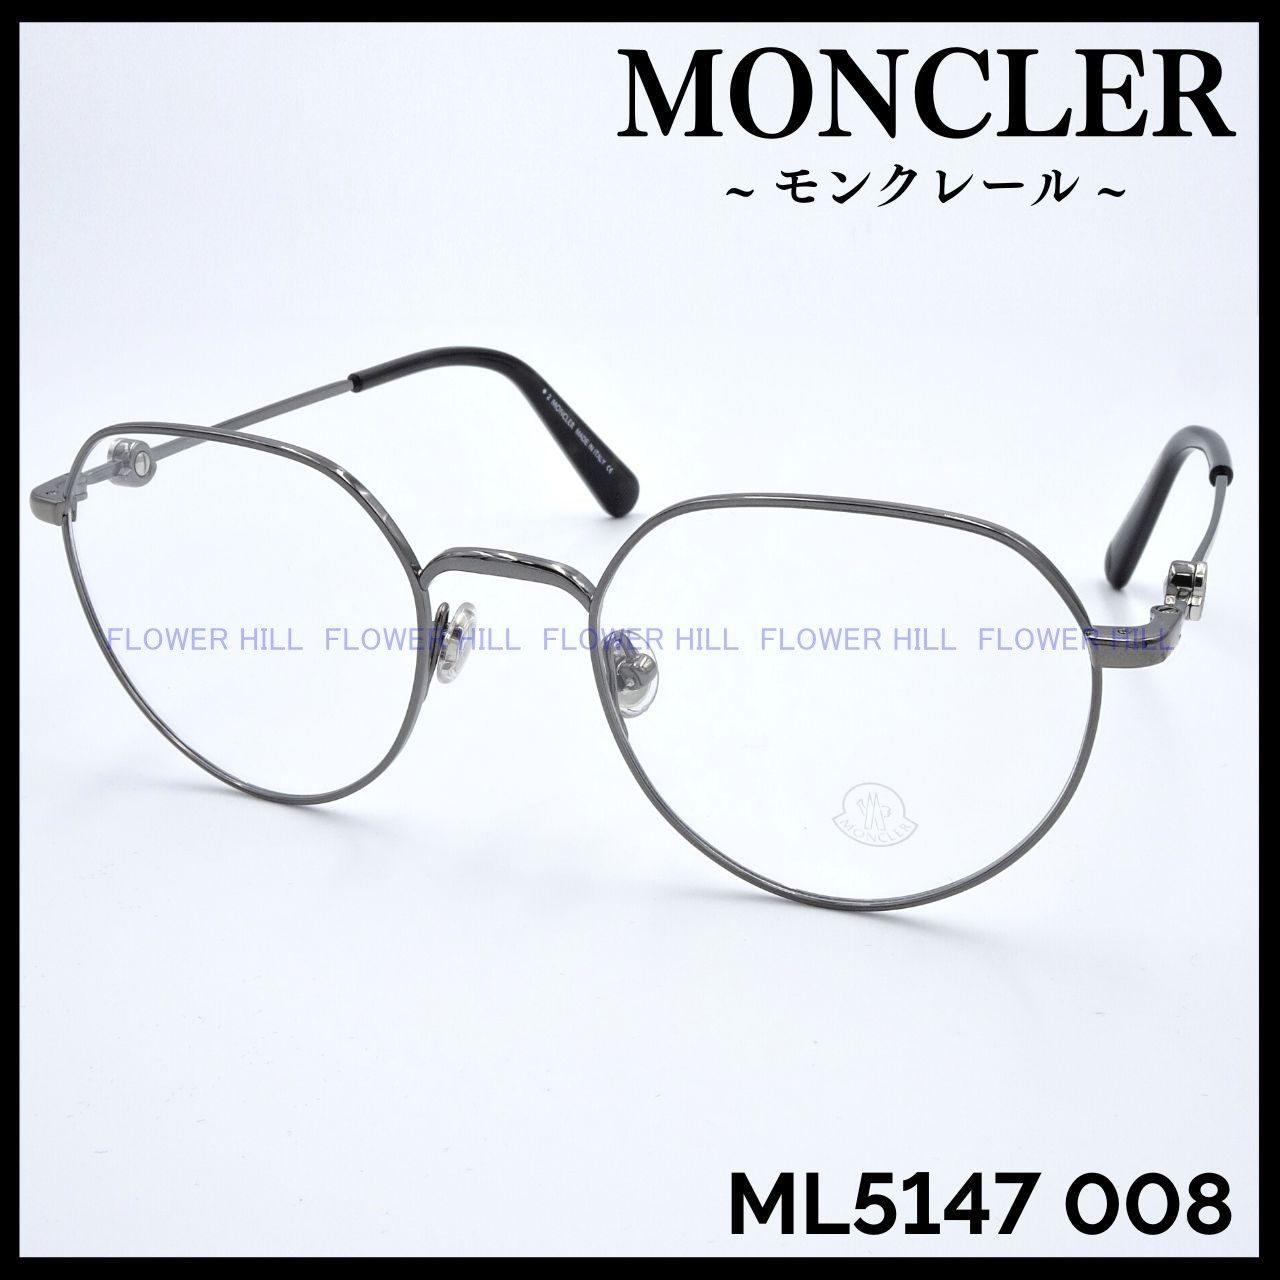 MONCLER ML5147 008 メガネ フレーム チタニウムモデル-